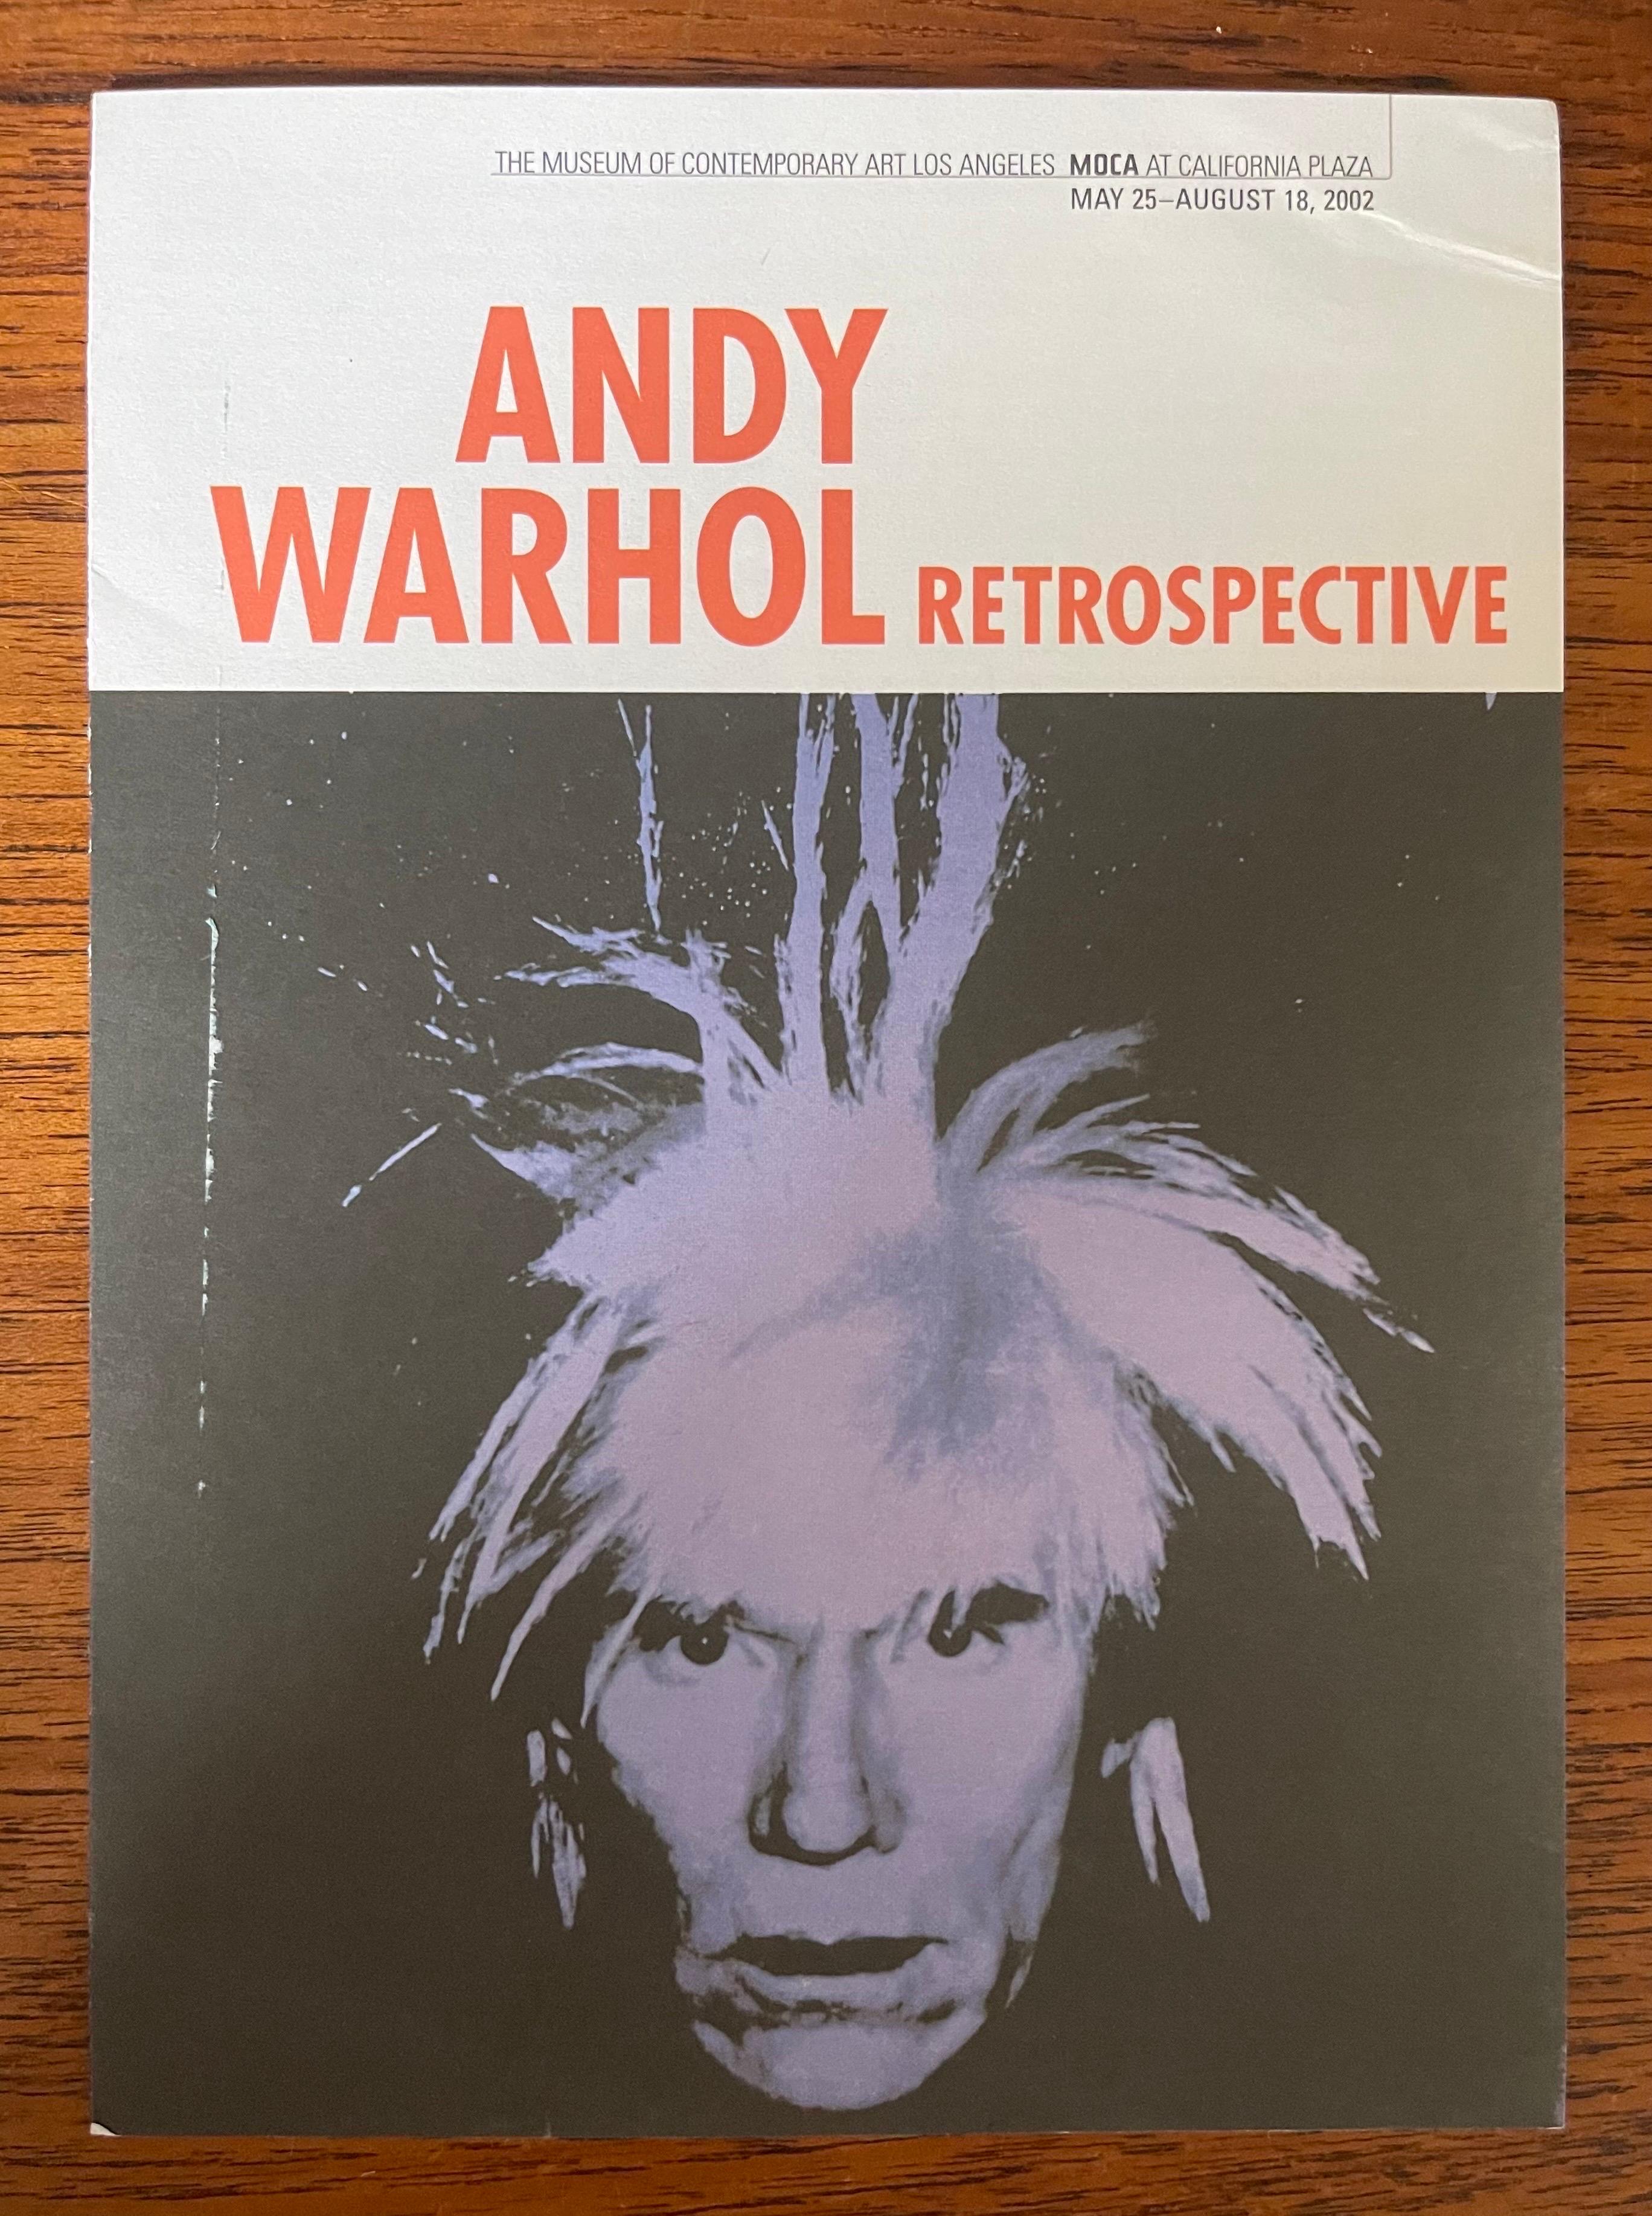 Livres d'art rétrospectifs et programmes d'expositions Moca LA 2002 de Warhol en vente 8